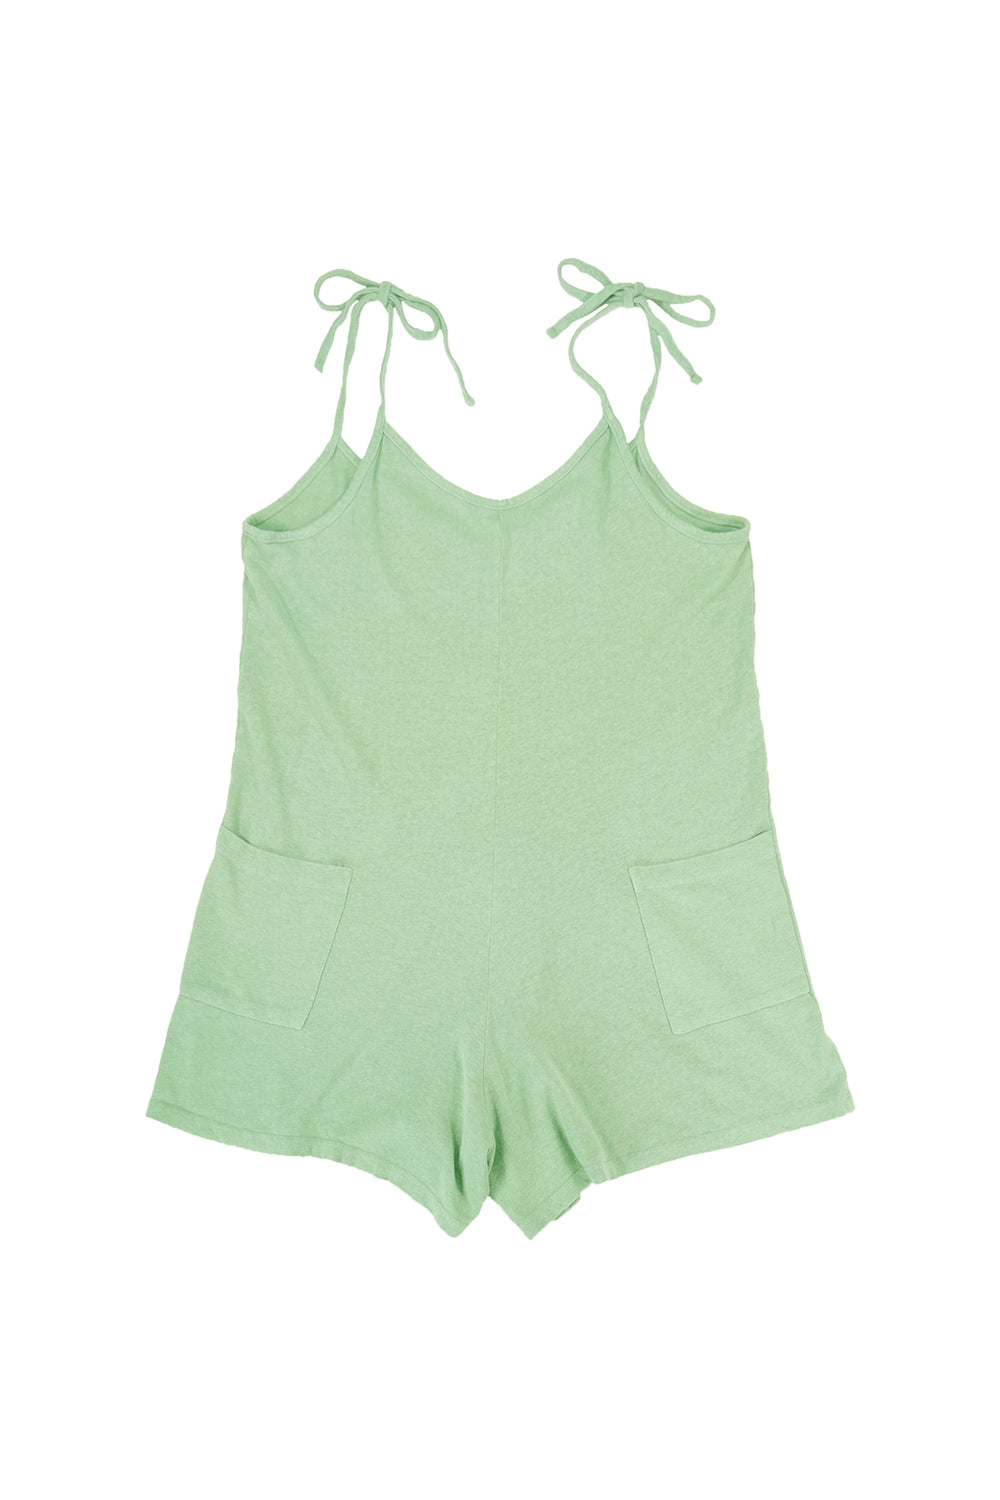 Sespe Short | Jungmaven Hemp Clothing & Accessories / Color: Sage Green